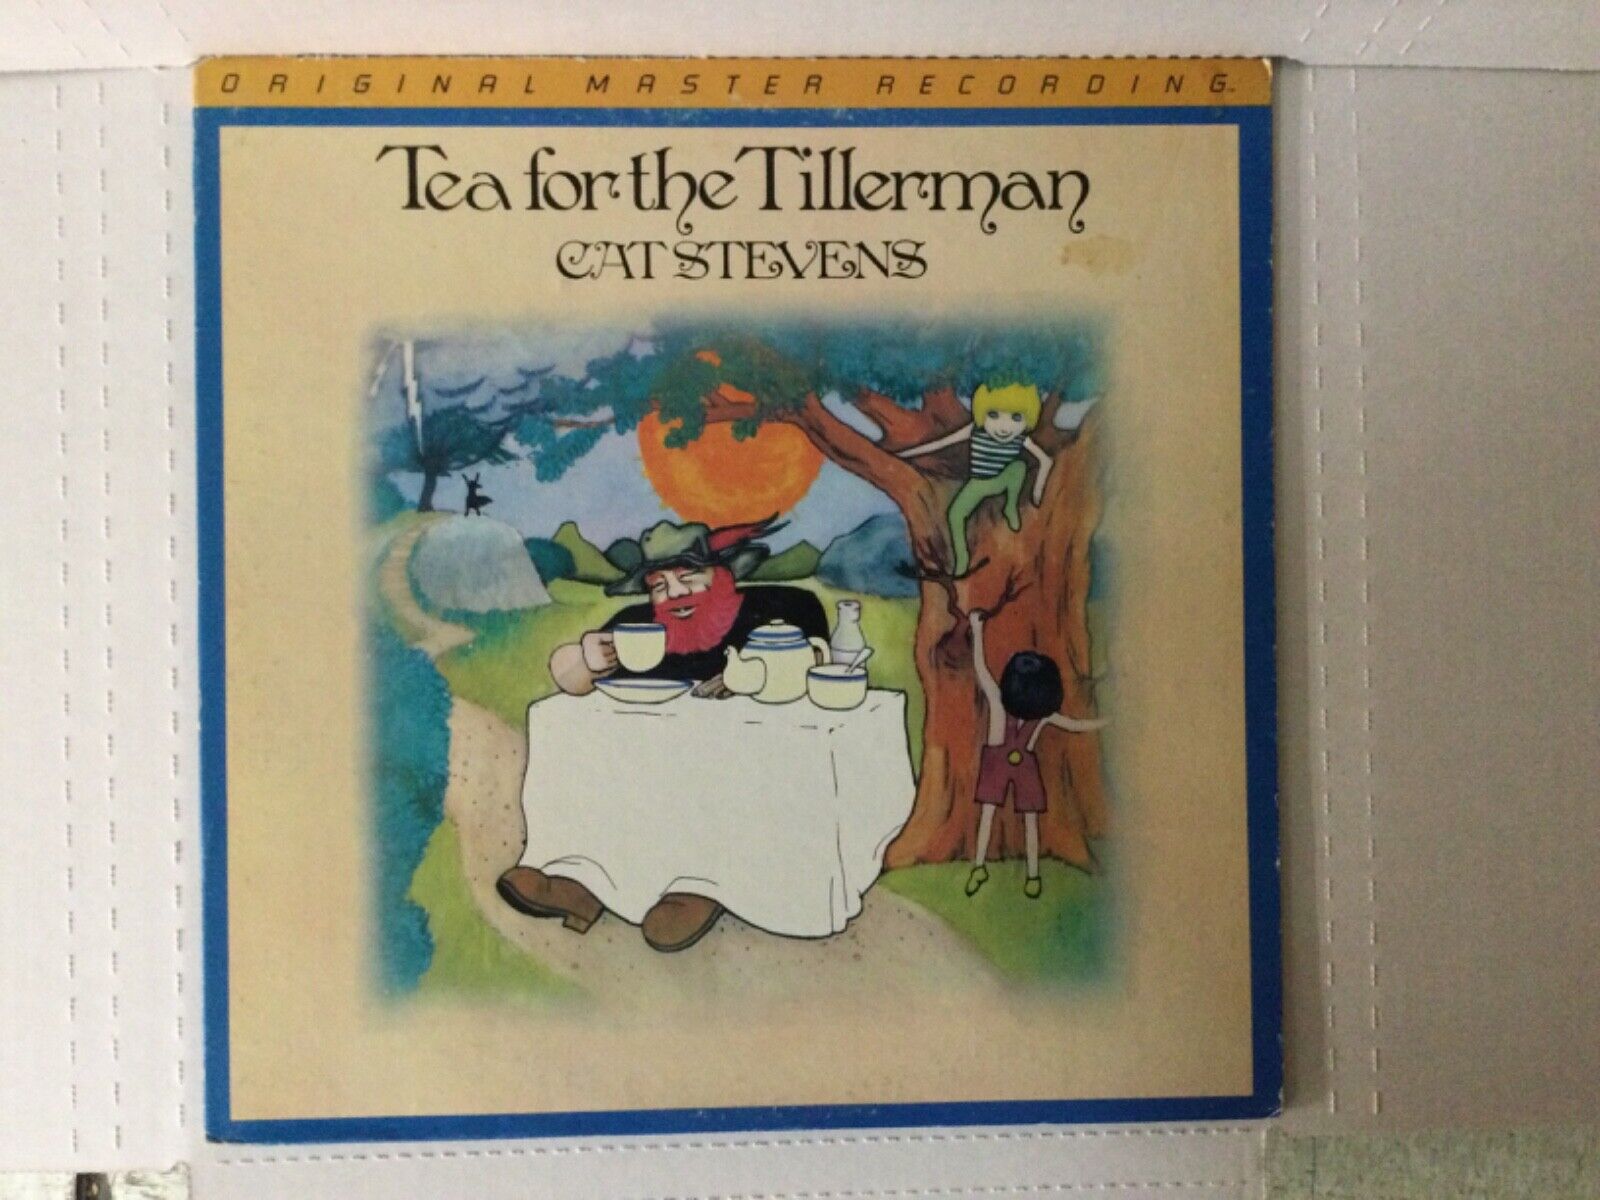 CAT STEVENS - TEA FOR THE TILLERMAN (Original Master Recording)